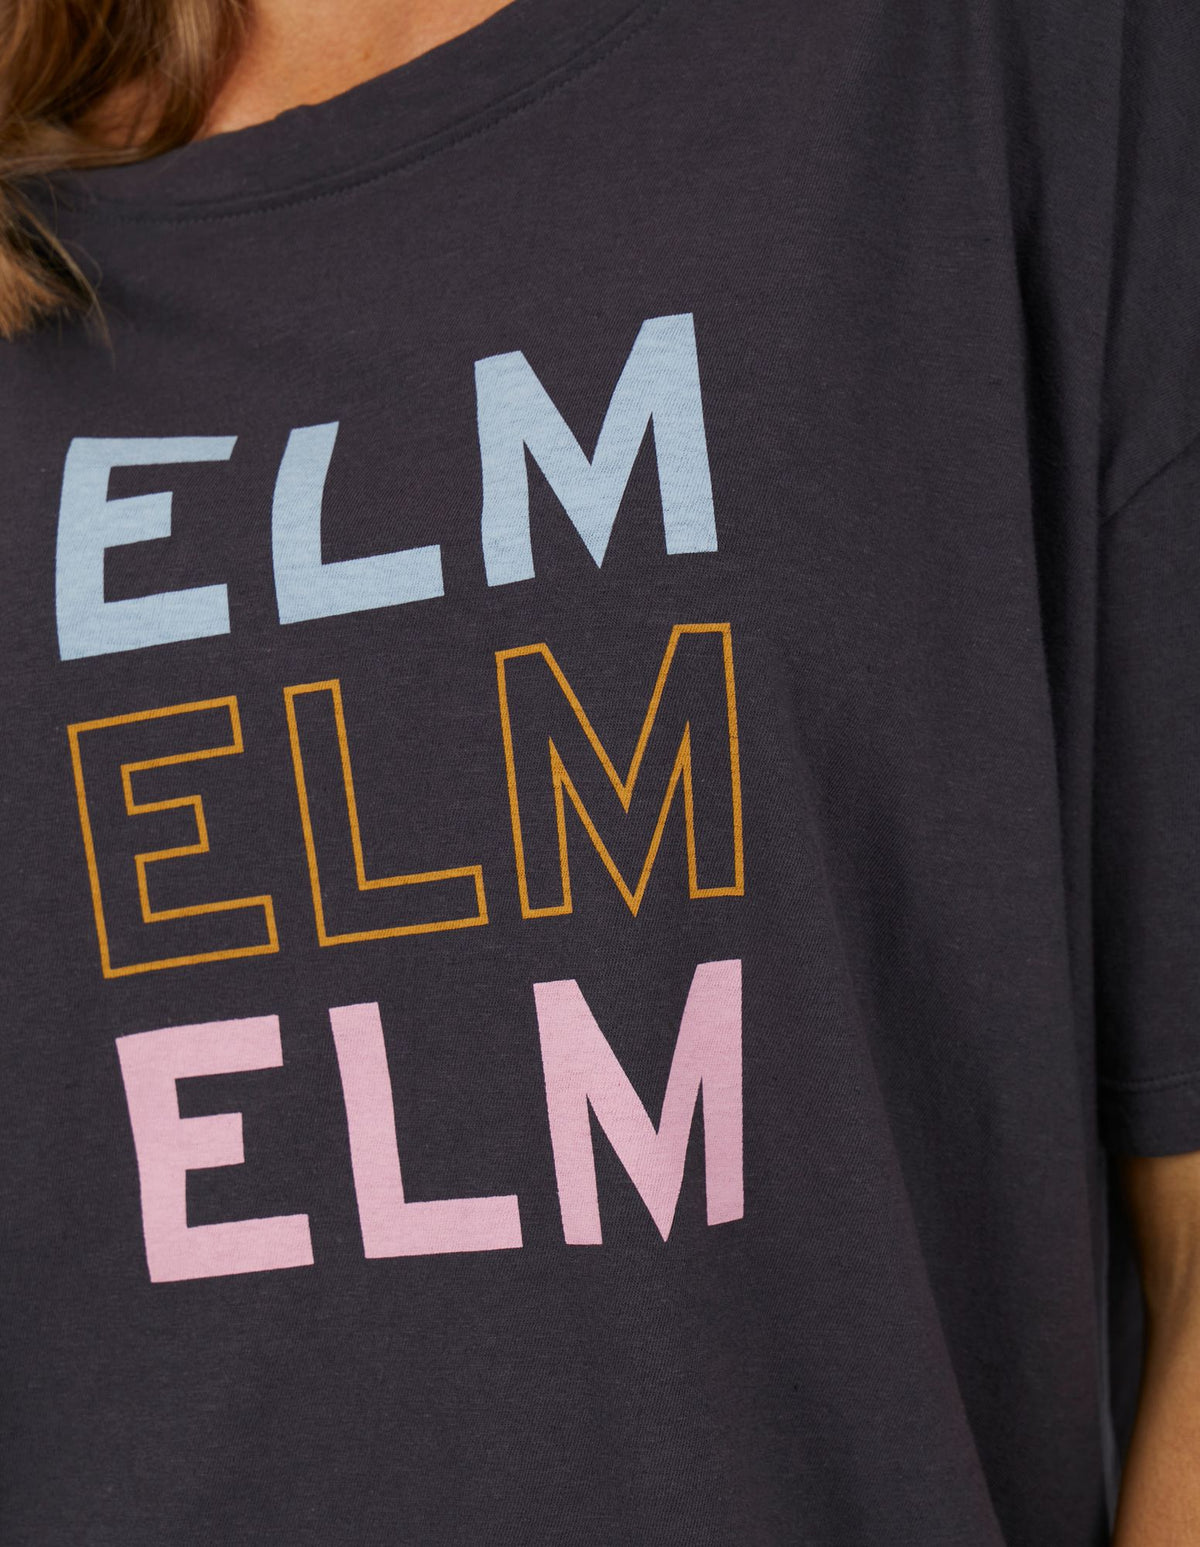 Elm Block S/S Tee - Washed Black - Elm Lifestyle